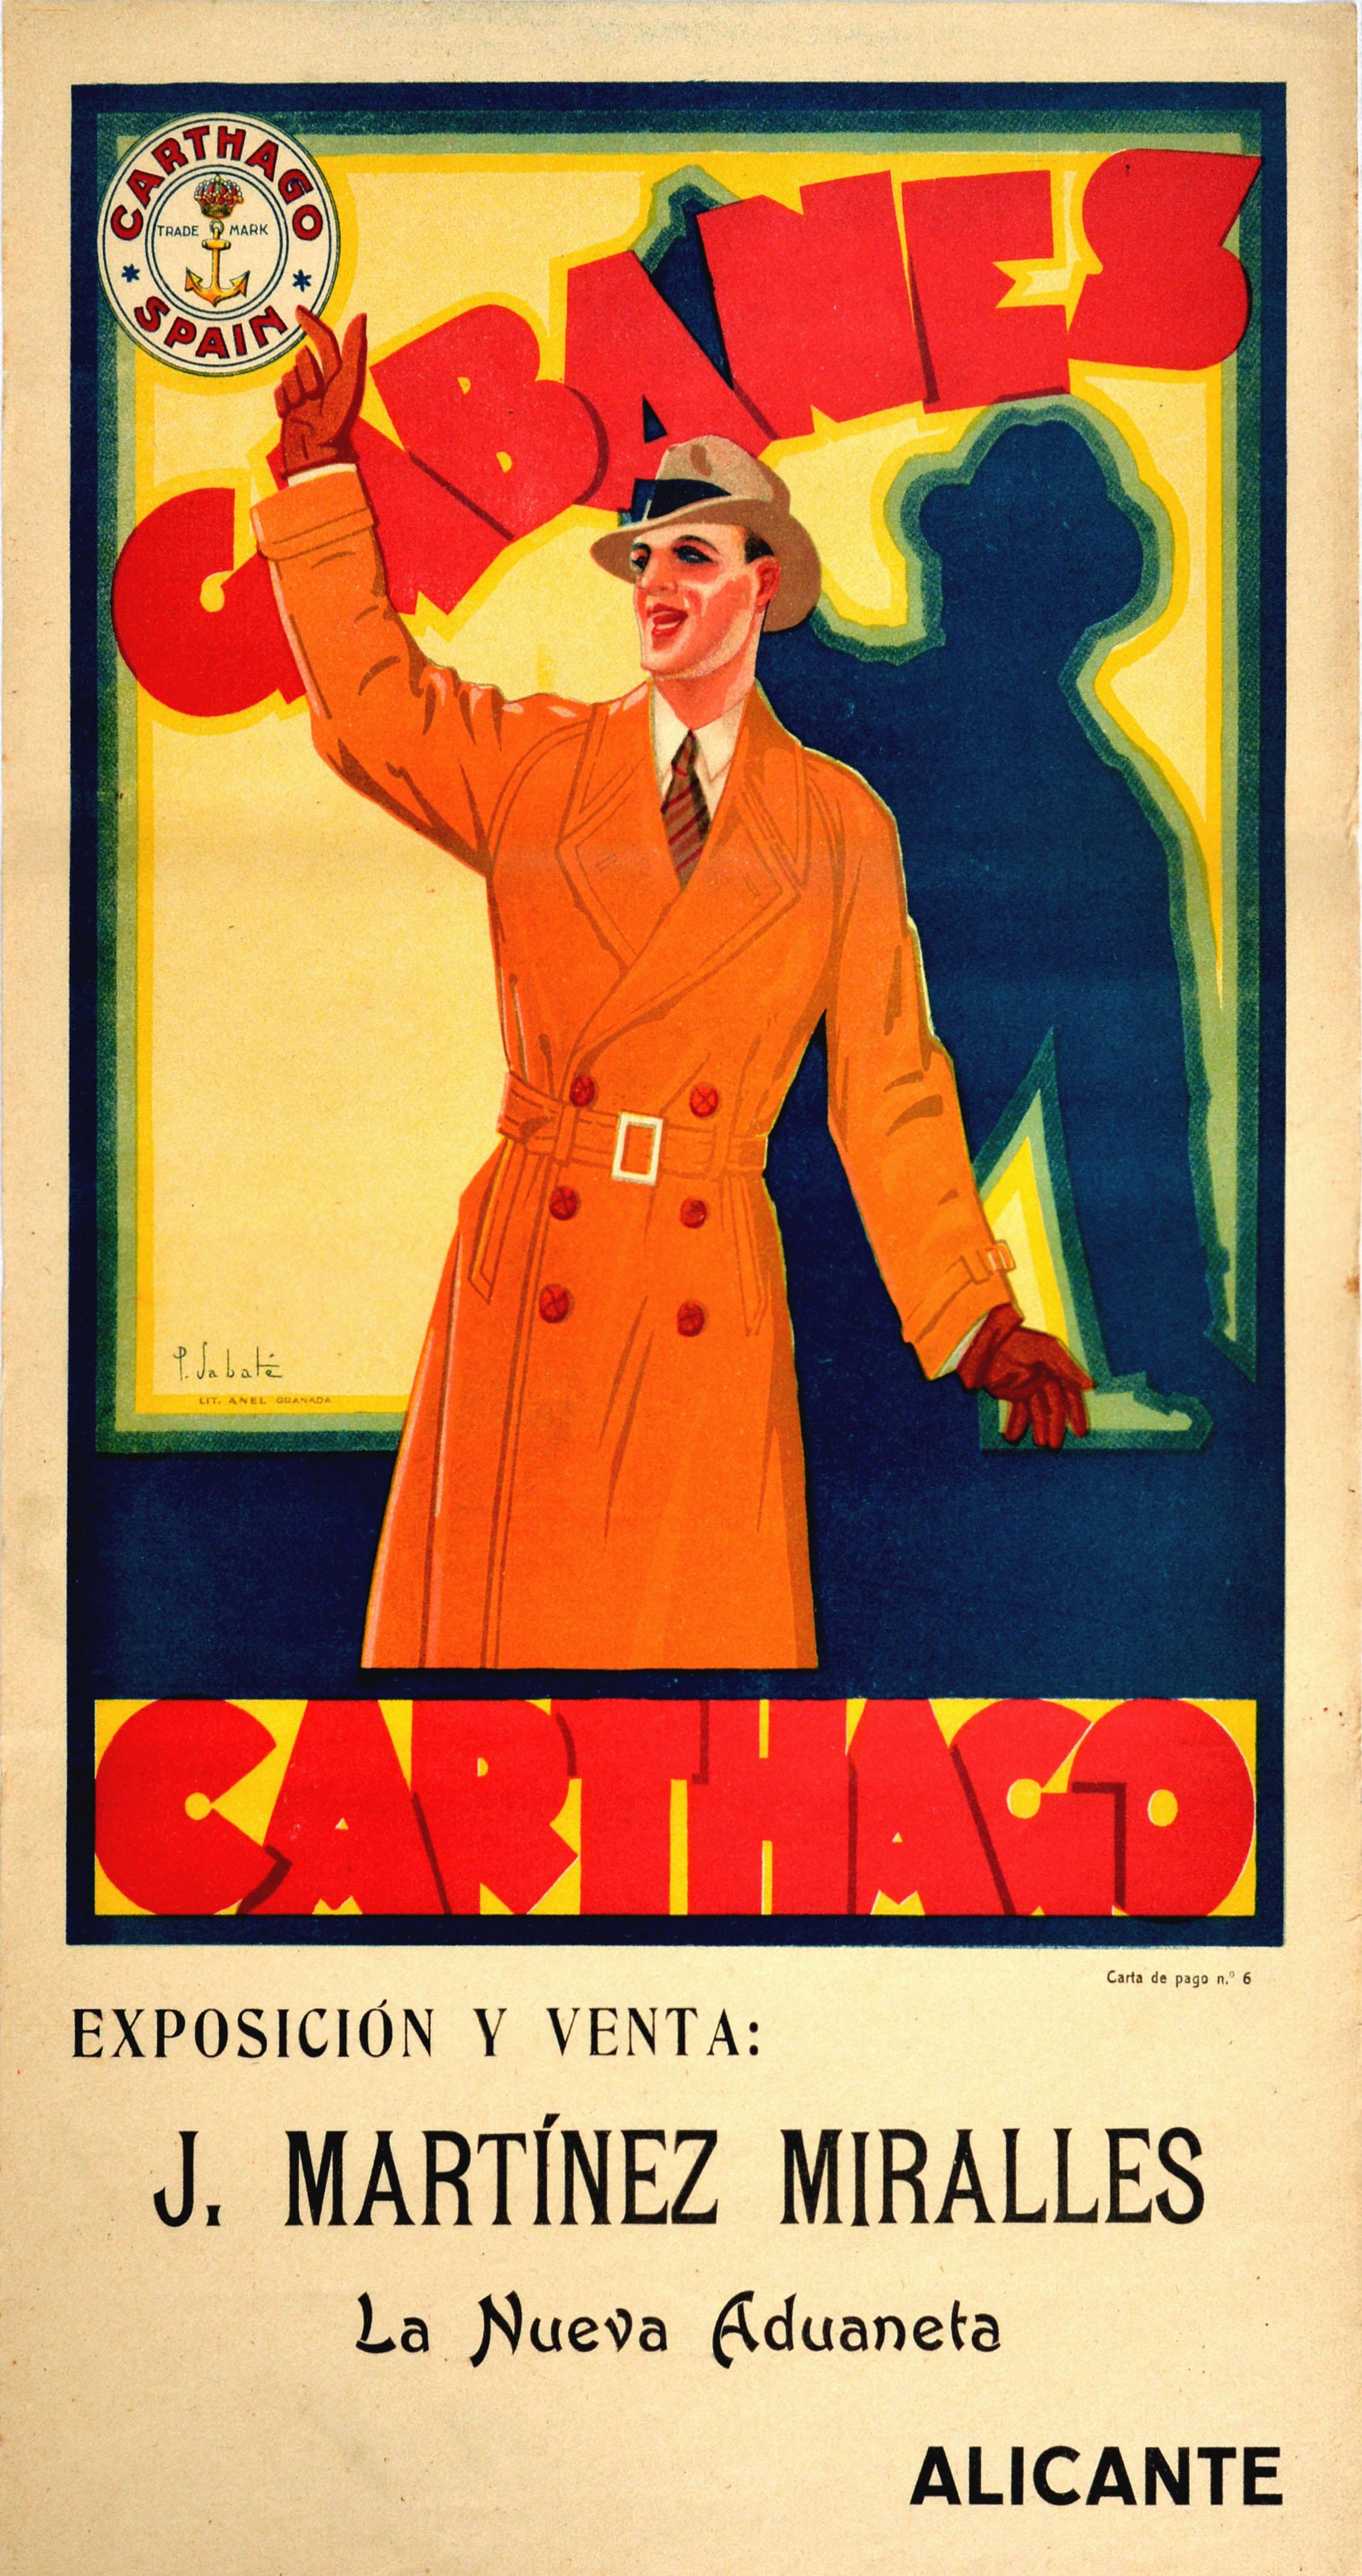 P. Sabate Print - Original Vintage Poster Cabanes Carthago Hats Men's Fashion Exhibition And Sale